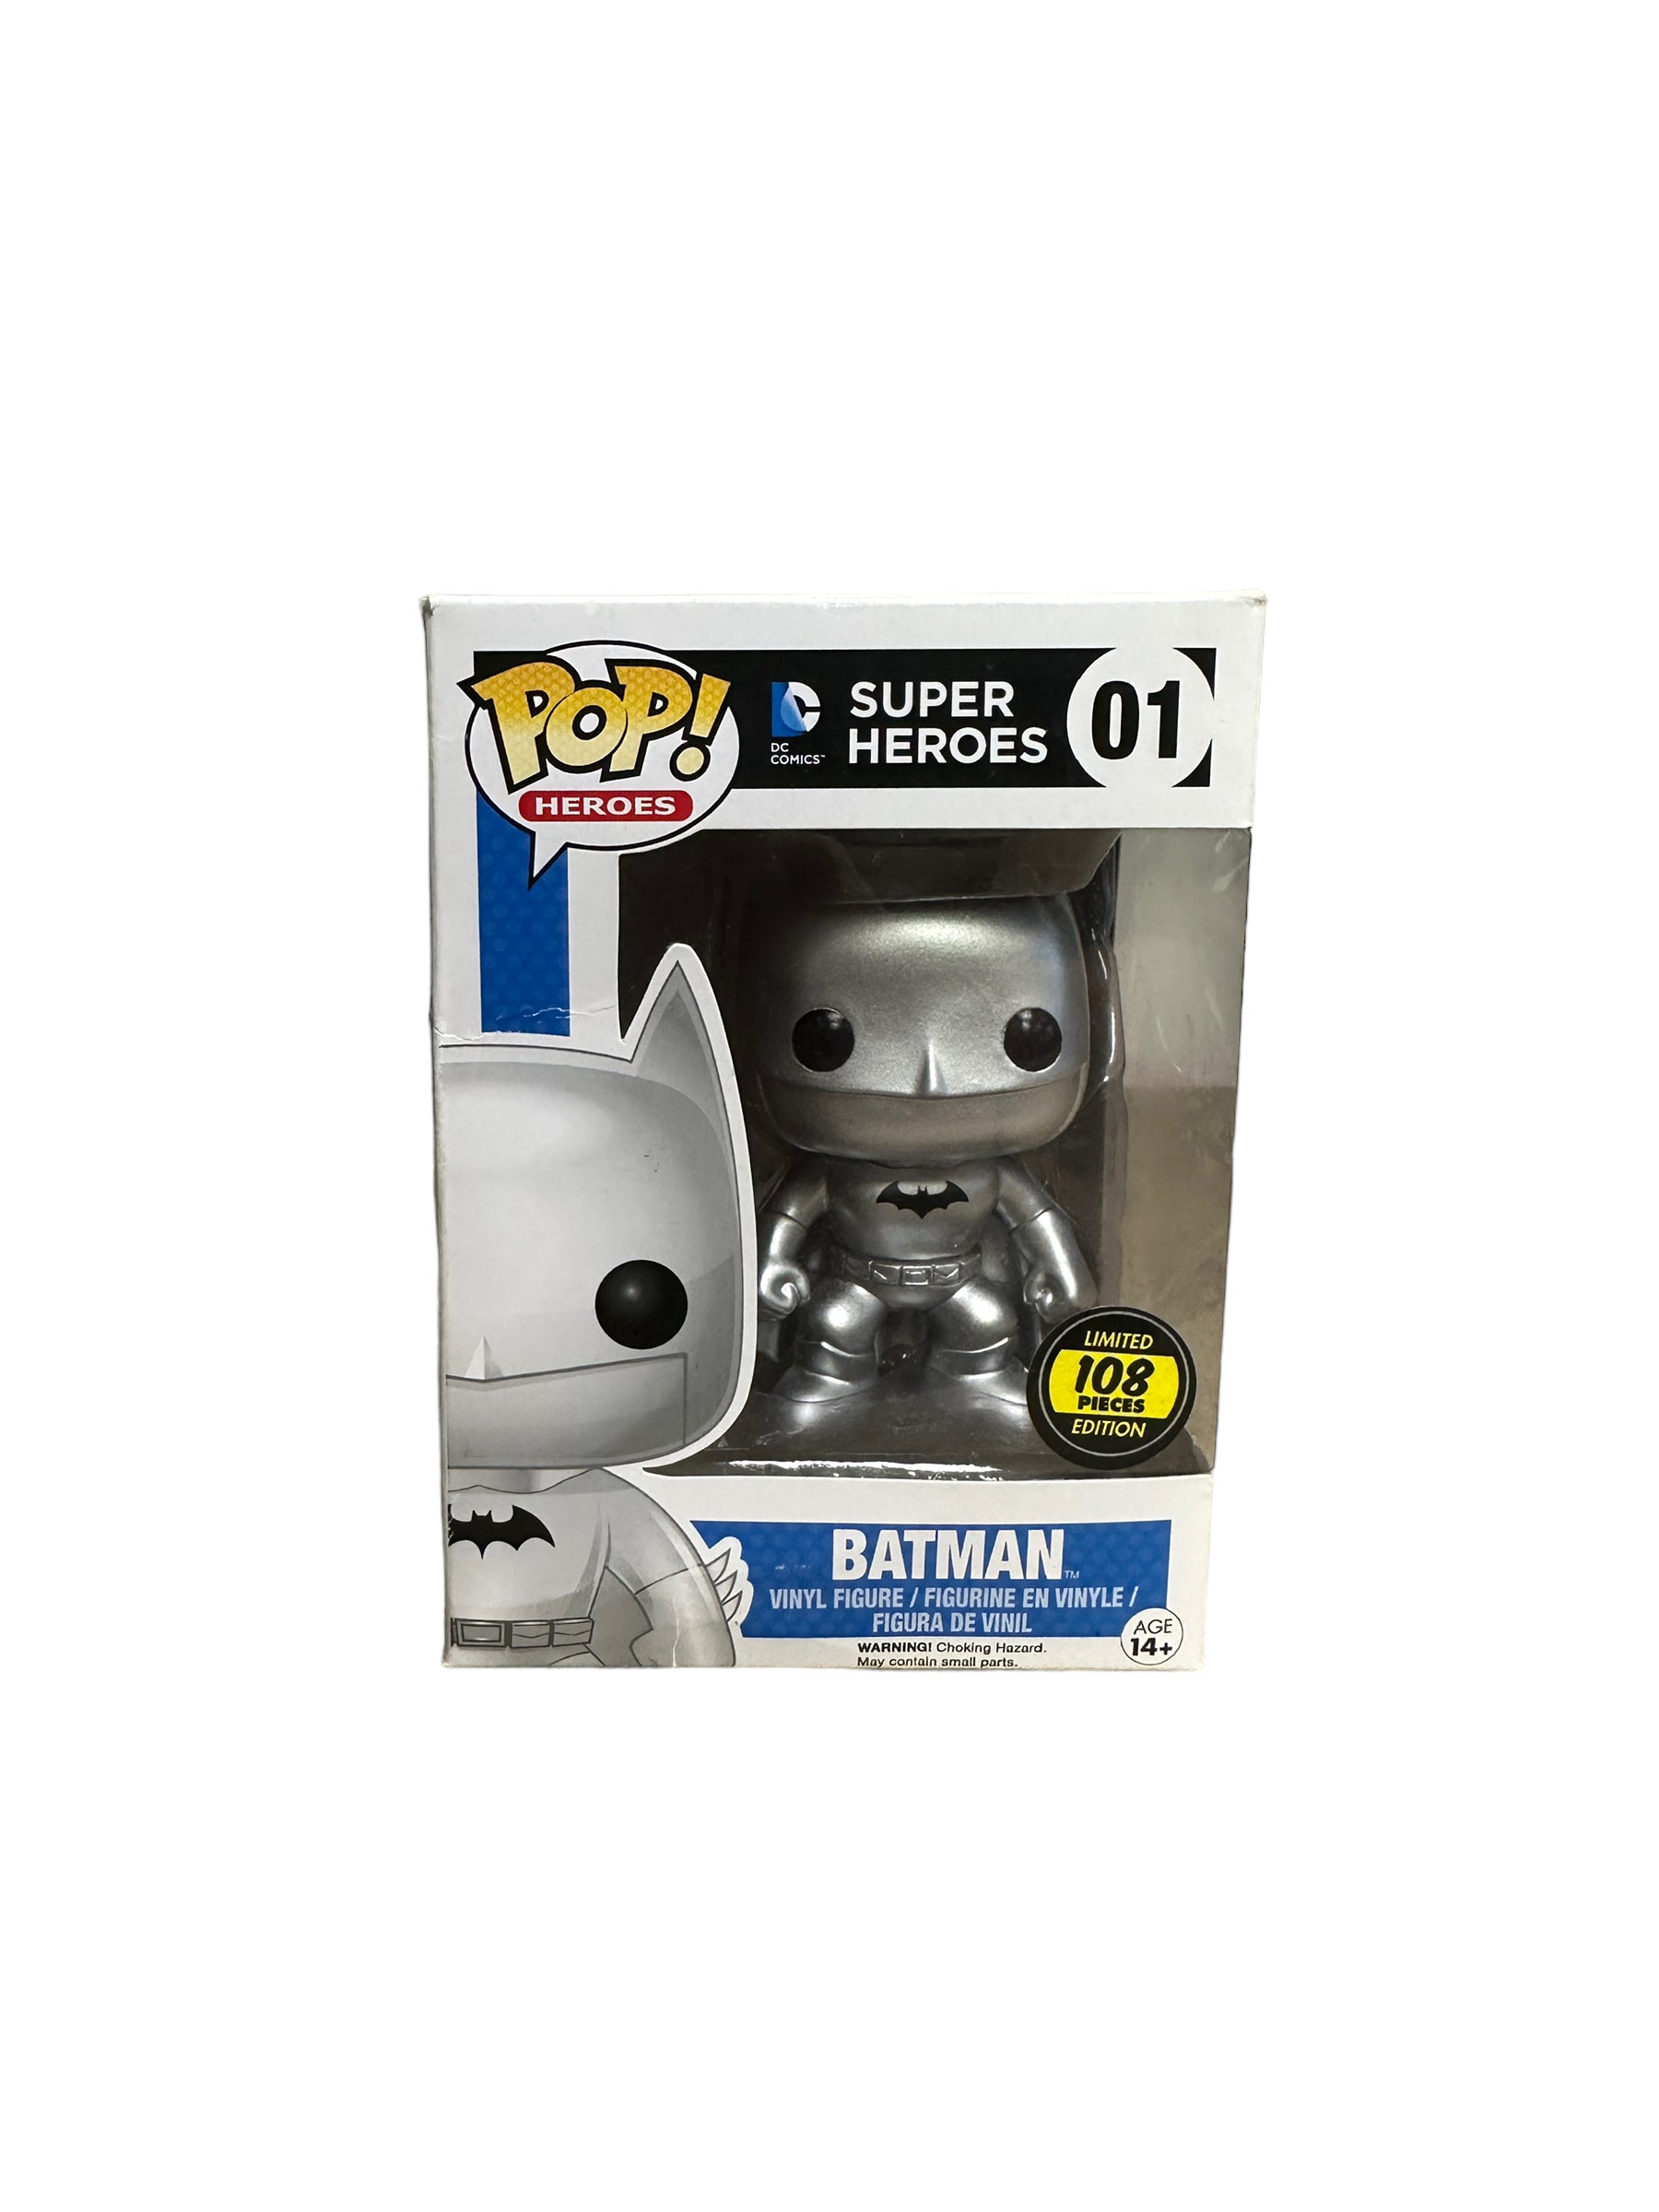 Batman #01 (Silver) Funko Pop! - DC Super Heroes - Hot Topic Employees Exclusive LE108 Pcs - Condition 6/10